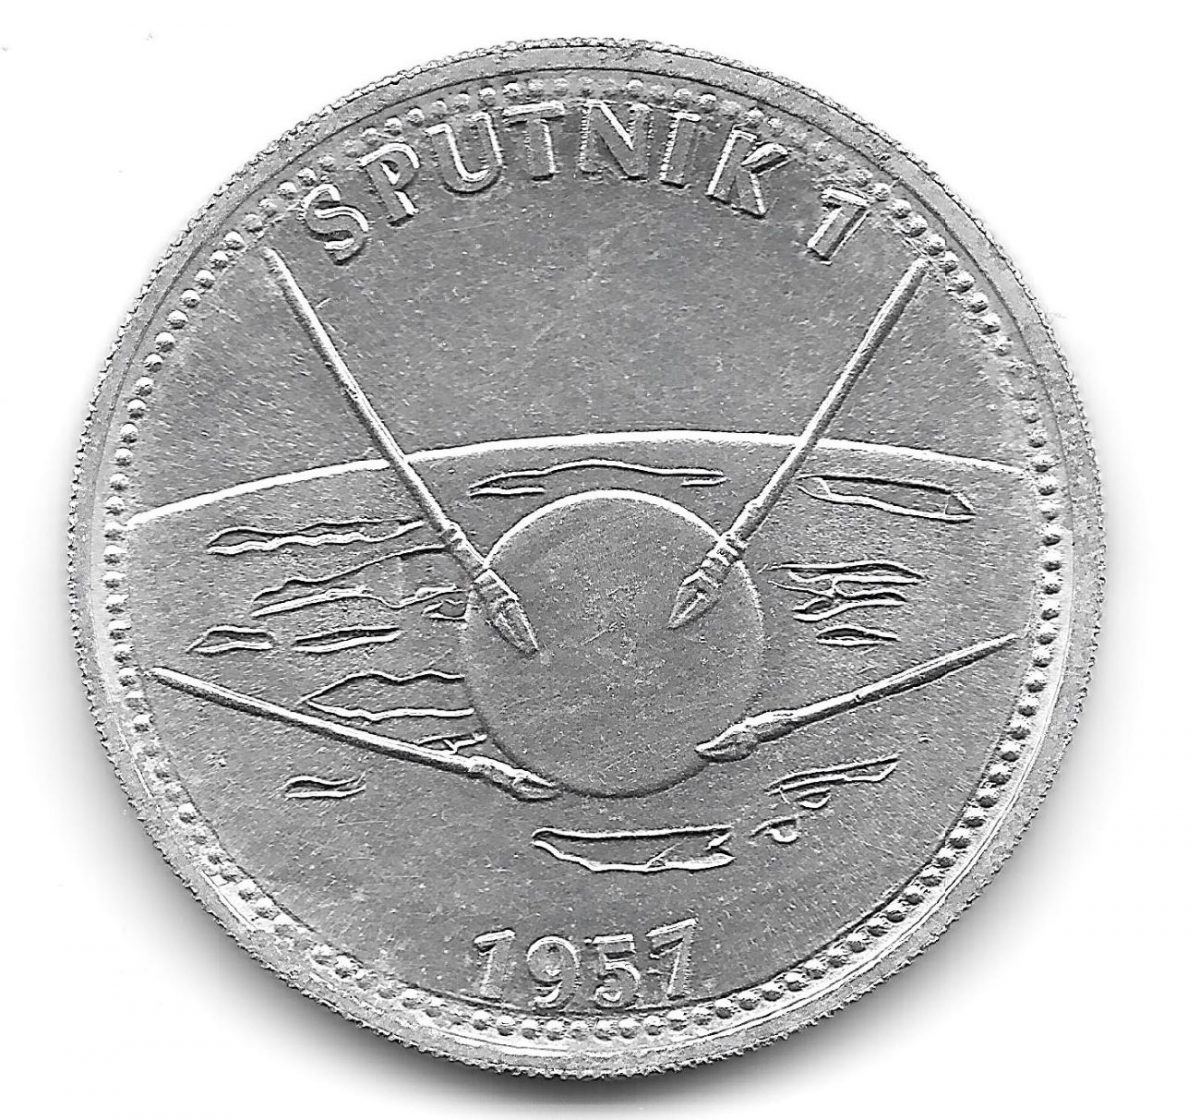 Shell, coins, Man in Flight, 1970s, Sputnik I